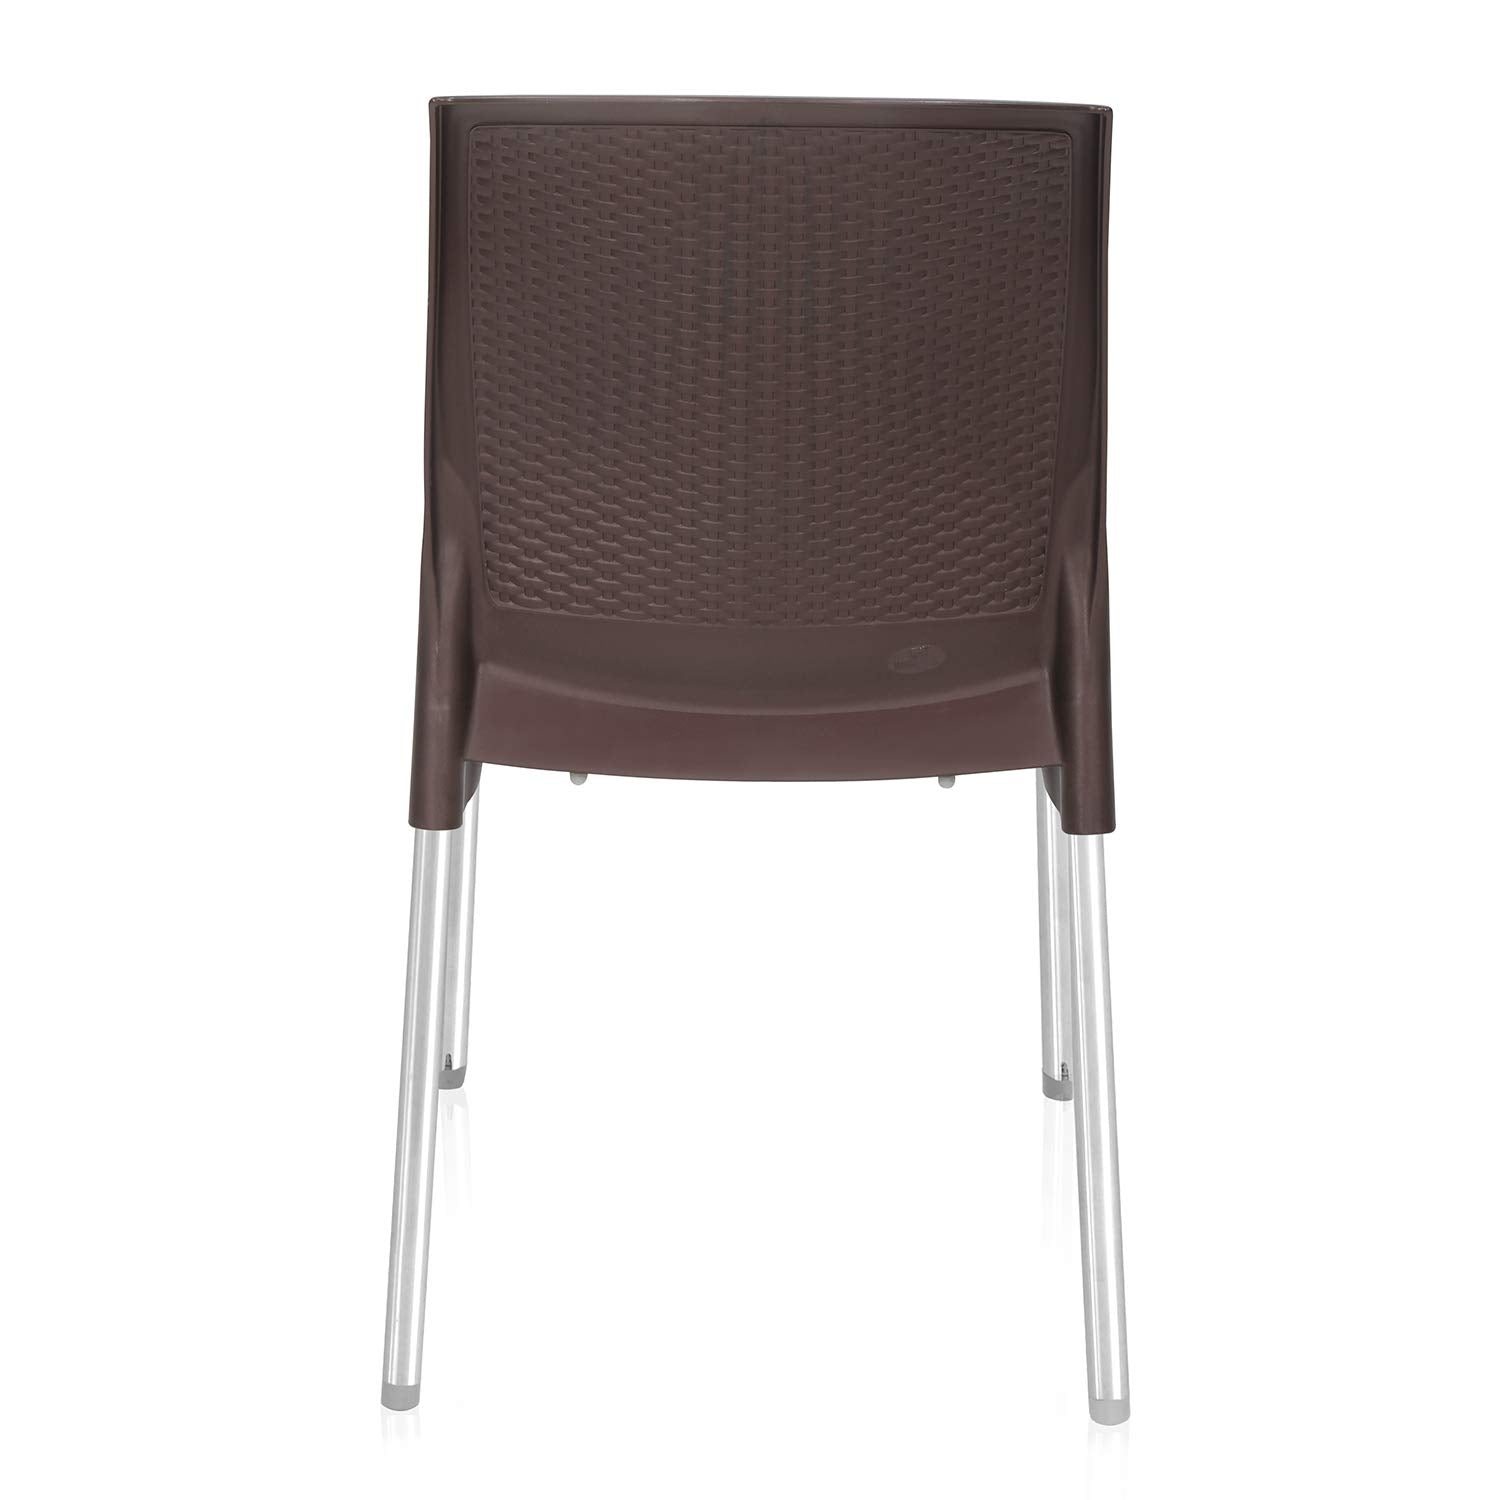 Nilkamal Novella 17 Stainless Steel Chair (Weather Brown)